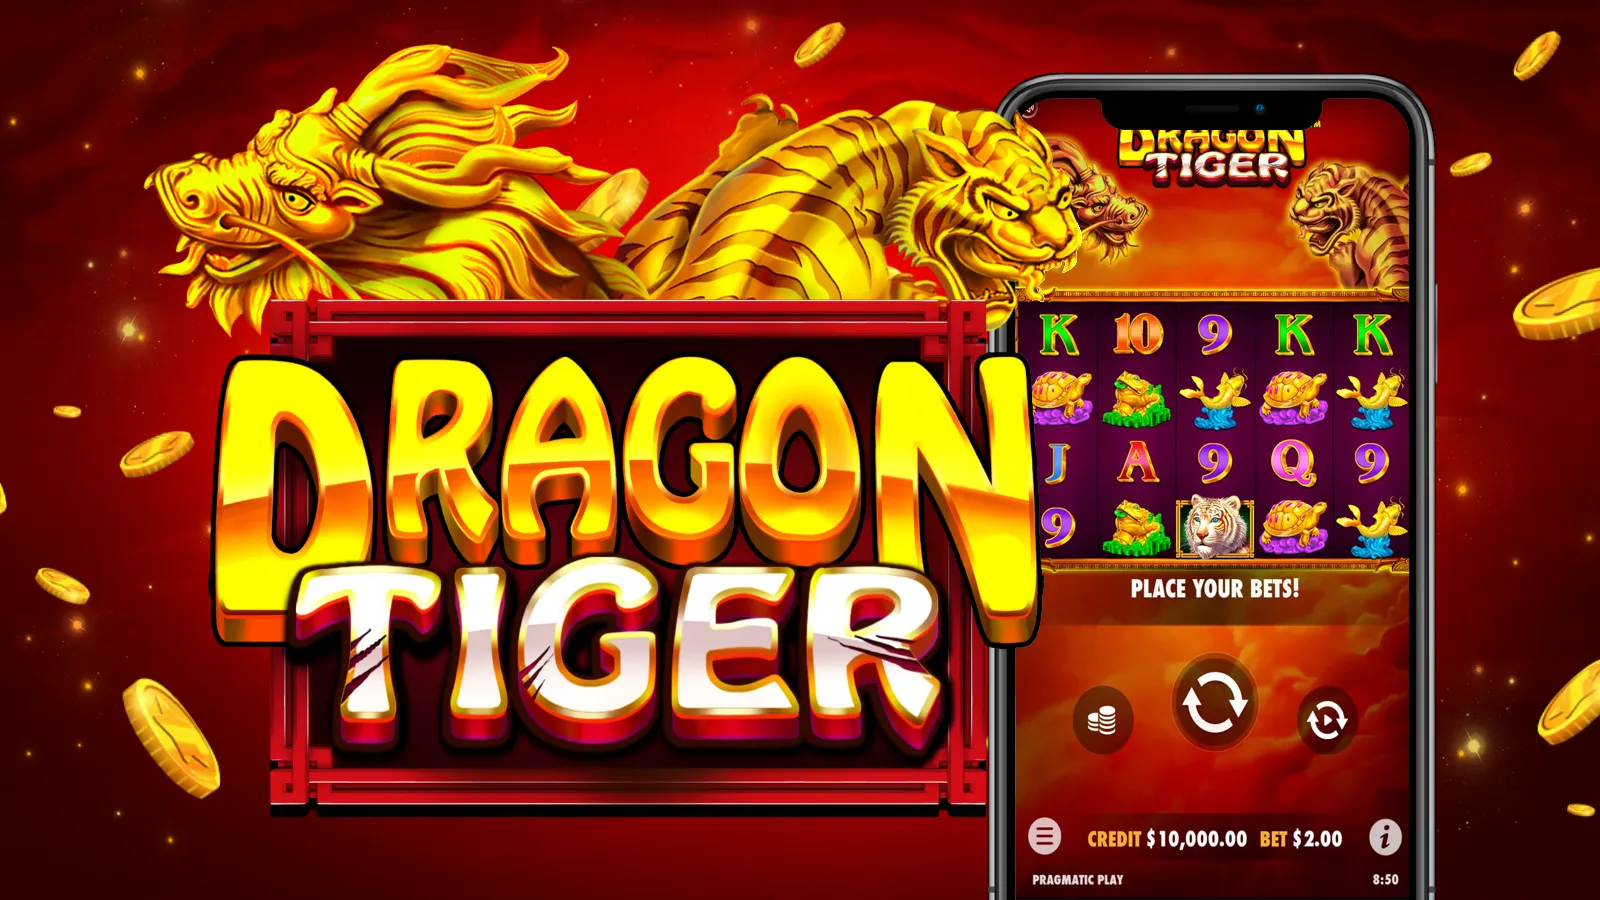 Tiger vs Dragon game 51 bonus